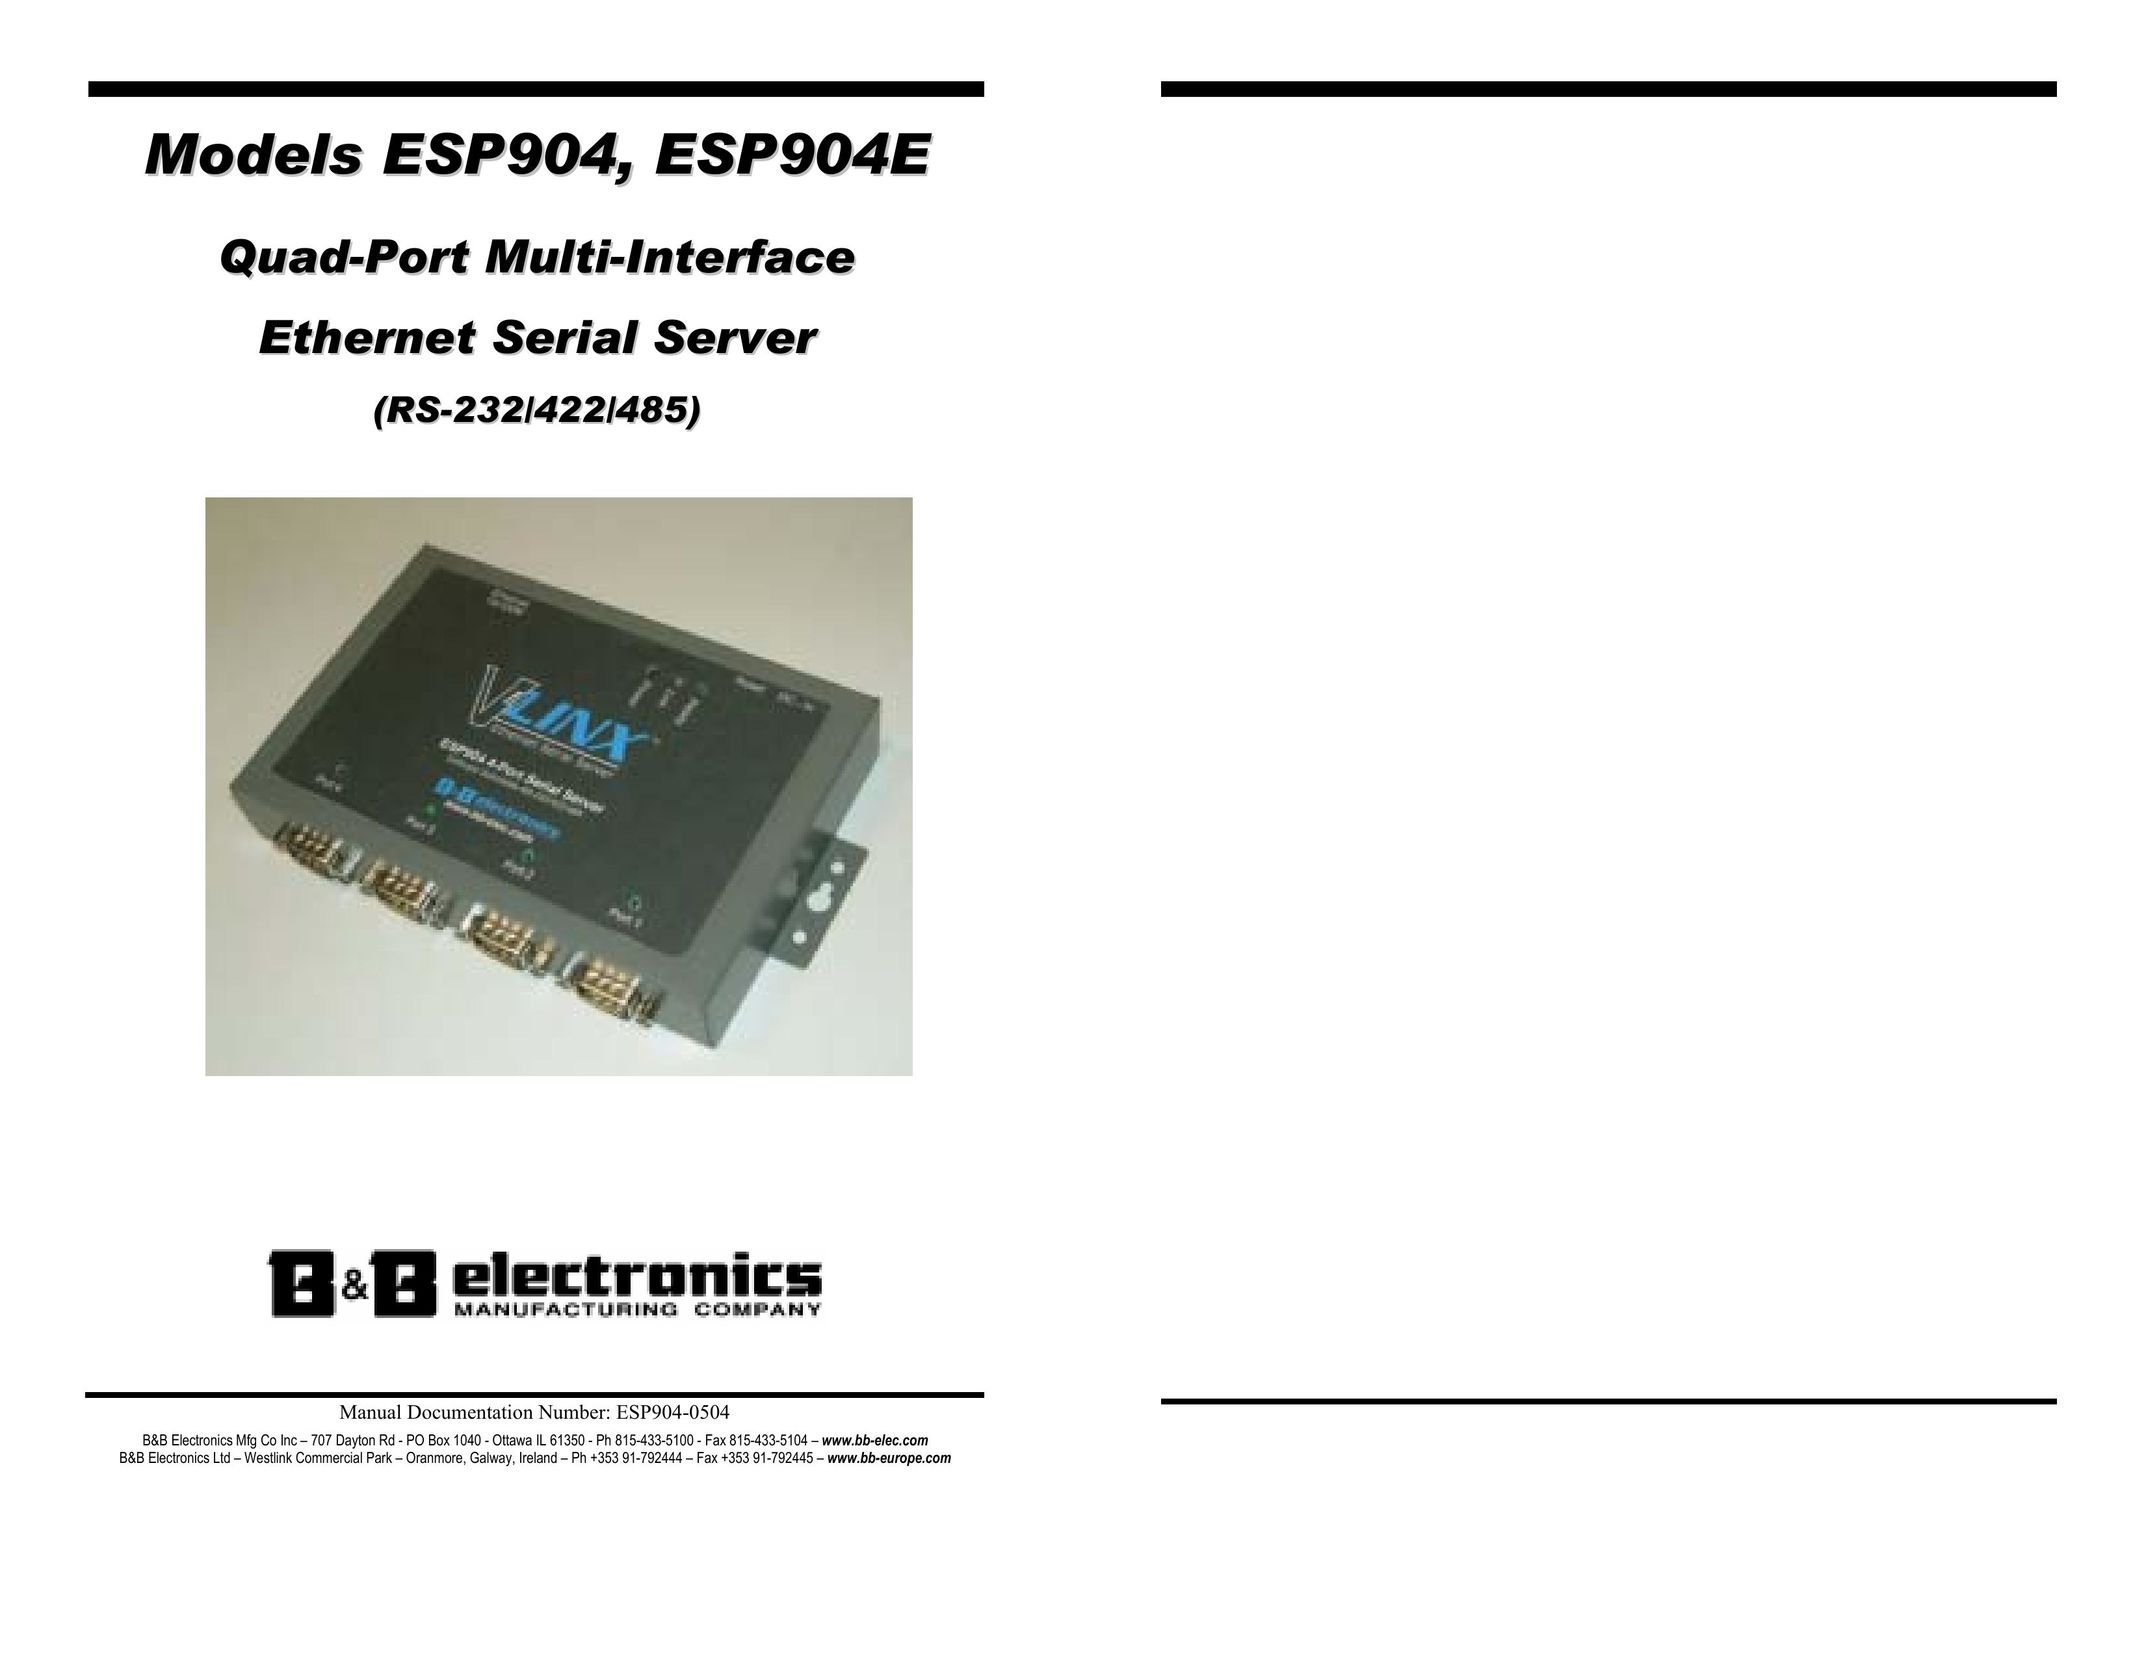 B&B Electronics ESP904E Server User Manual